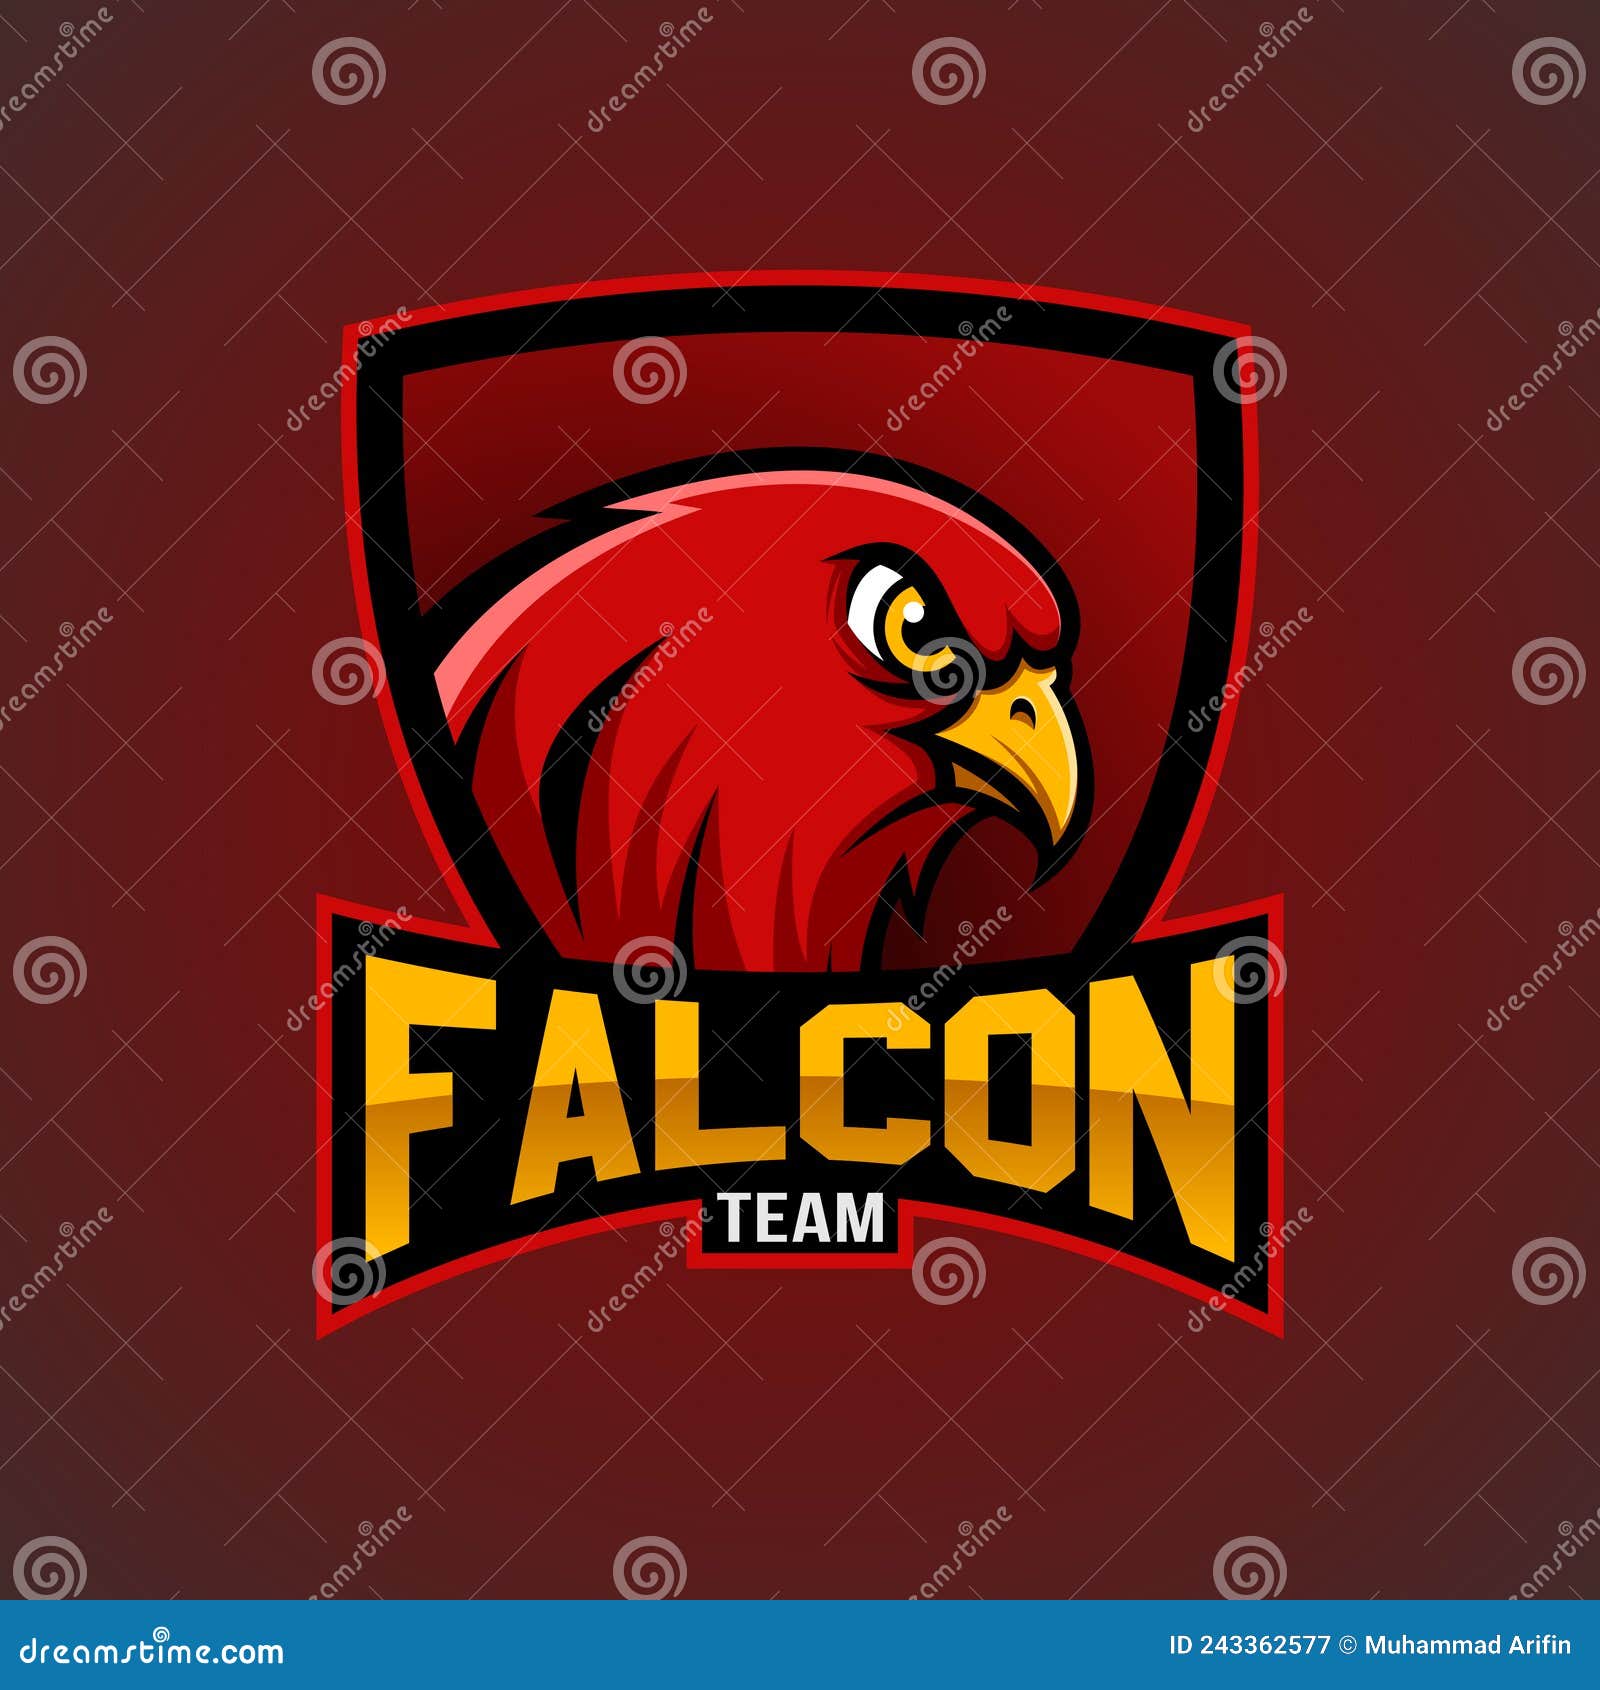 Falcon Team Logo with Shield and Text Mascot Logo Design